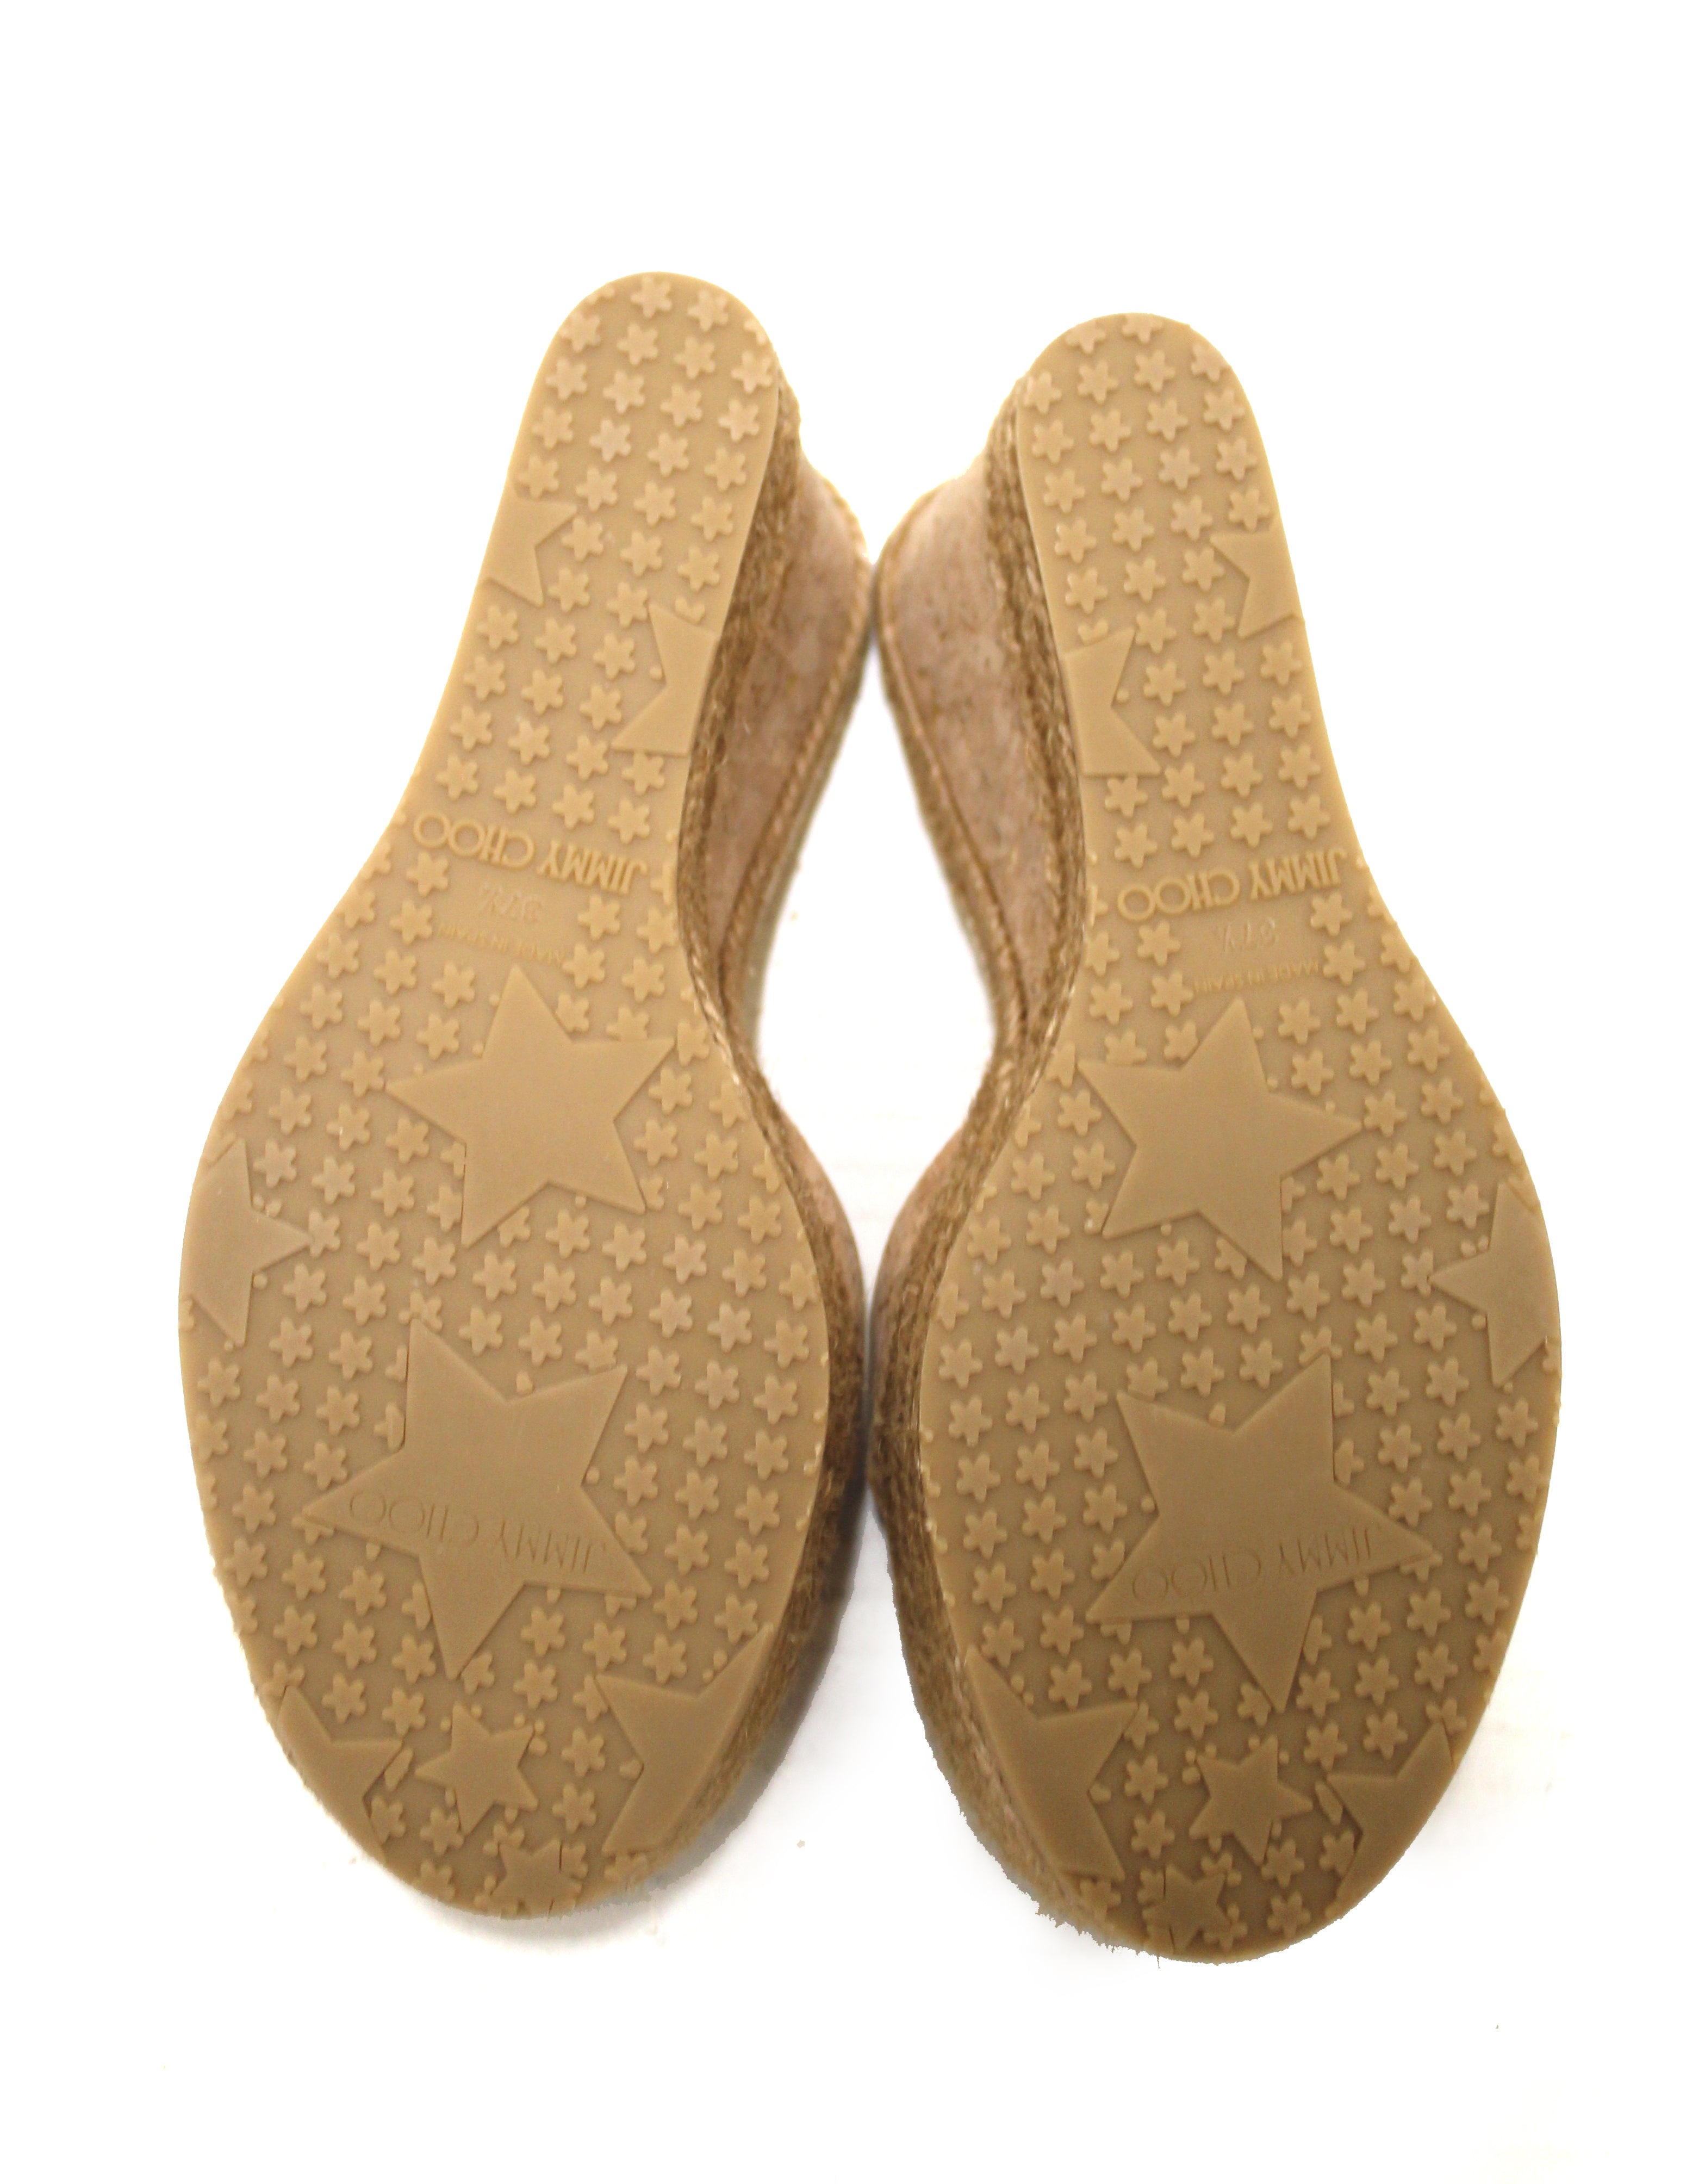 Jimmy Choo Gold Cork Wedge Platform Heel Shoes Size 37.5